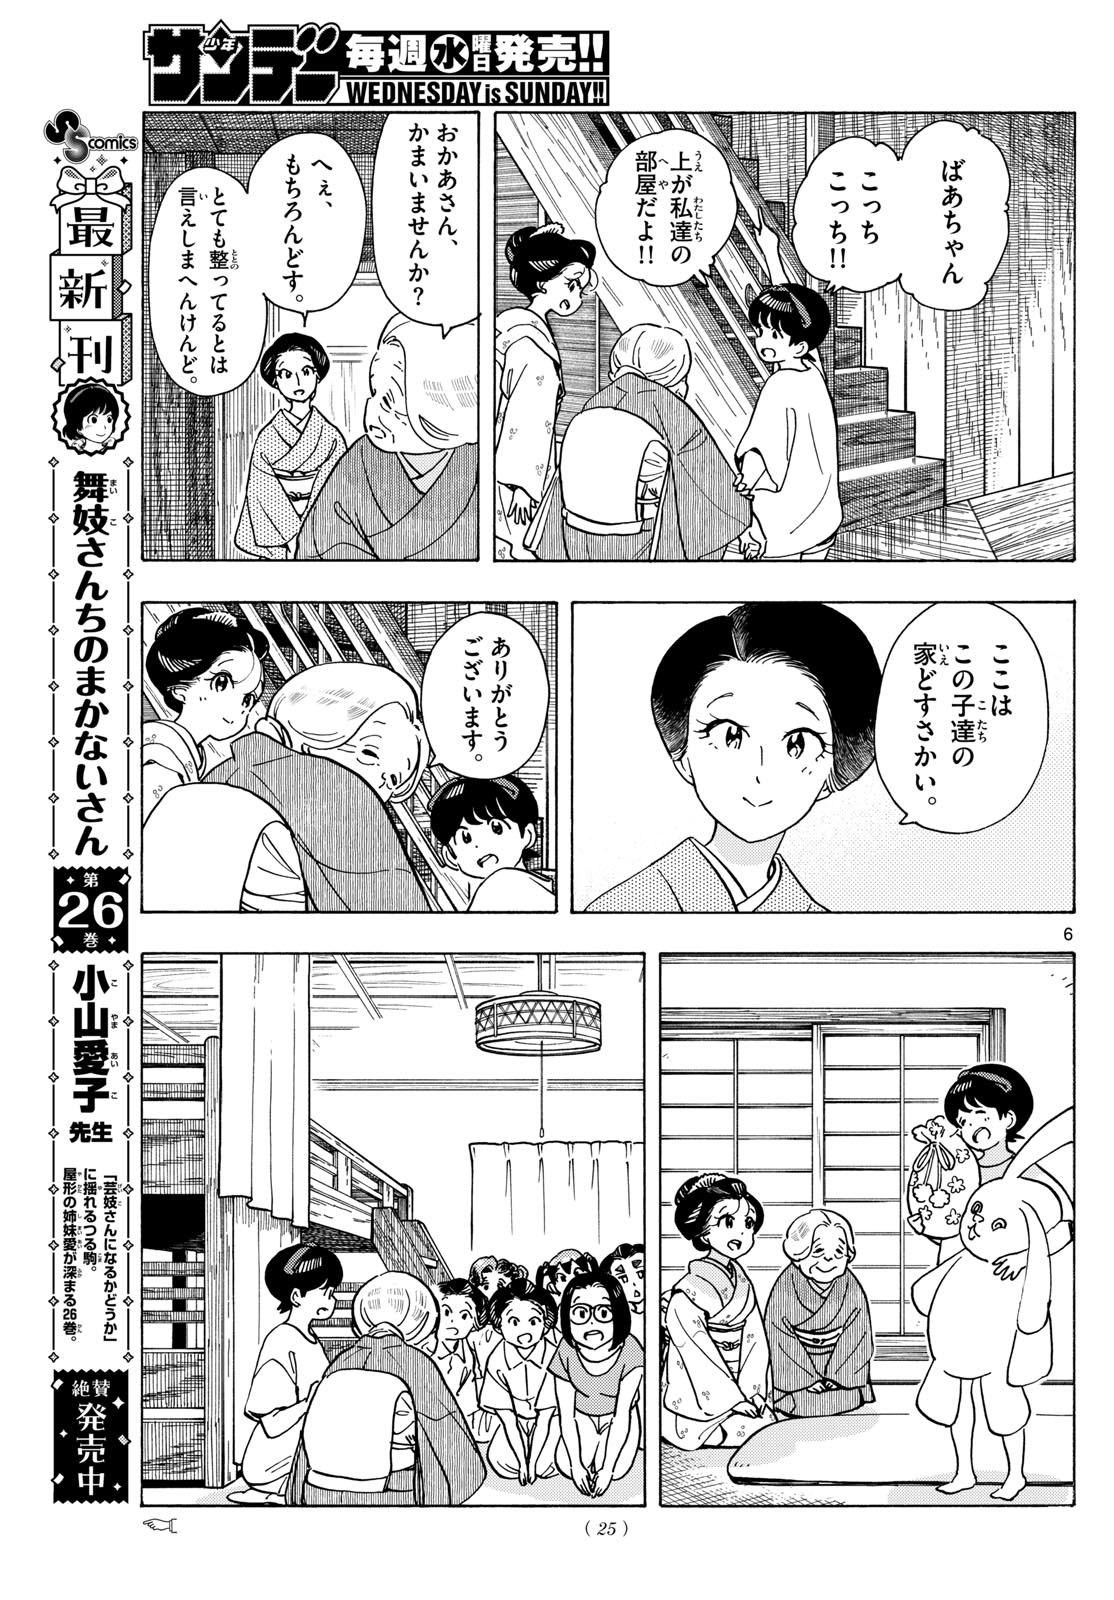 Maiko-san Chi no Makanai-san - Chapter 303 - Page 6